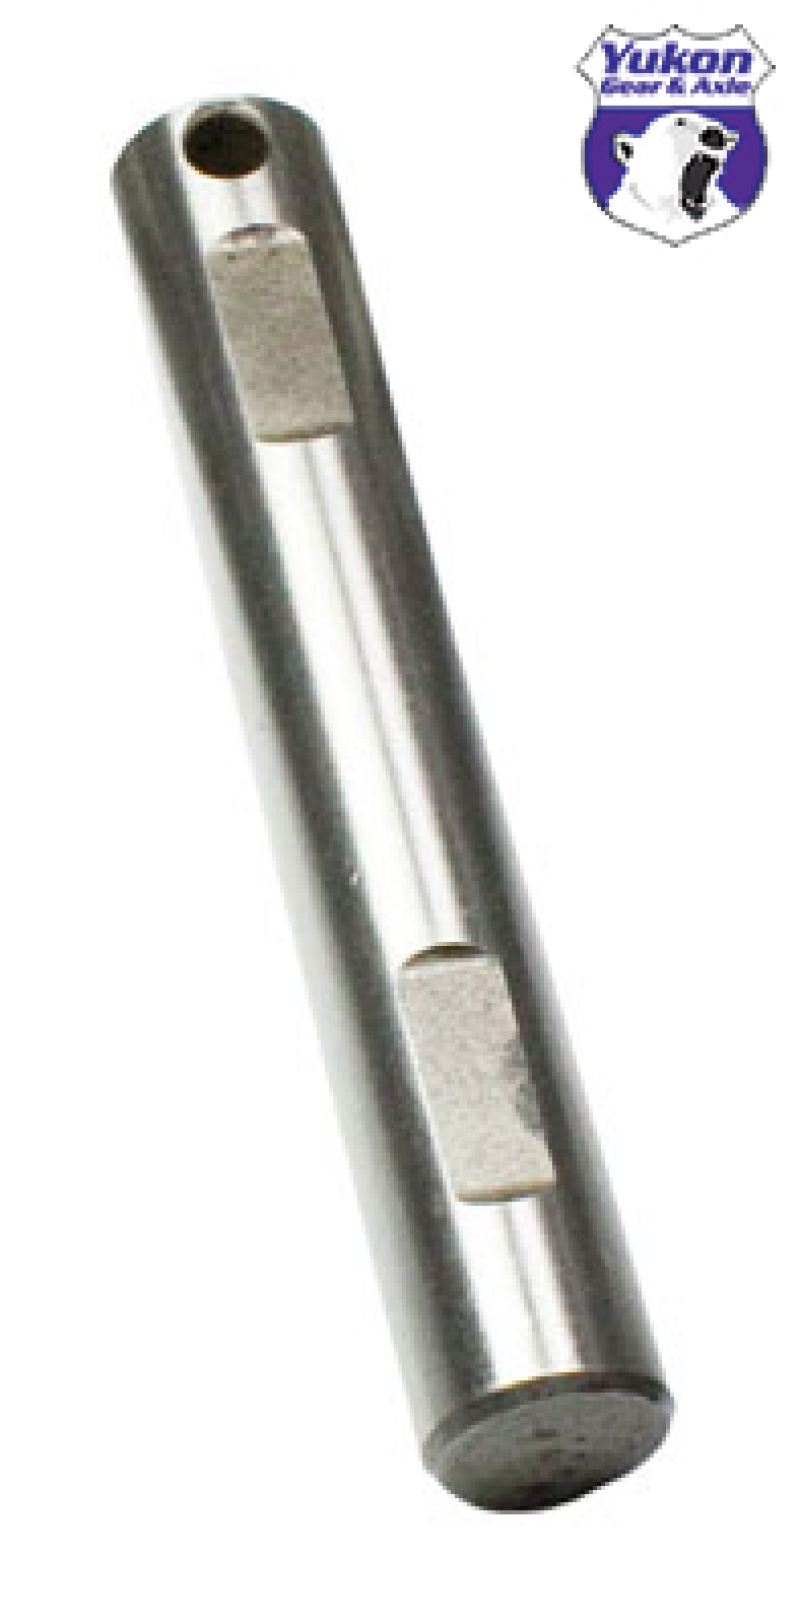 USA Standard Spartan Locker Samurai Spartan Locker Cross Pin Short - SL XP-SUZSAM-S